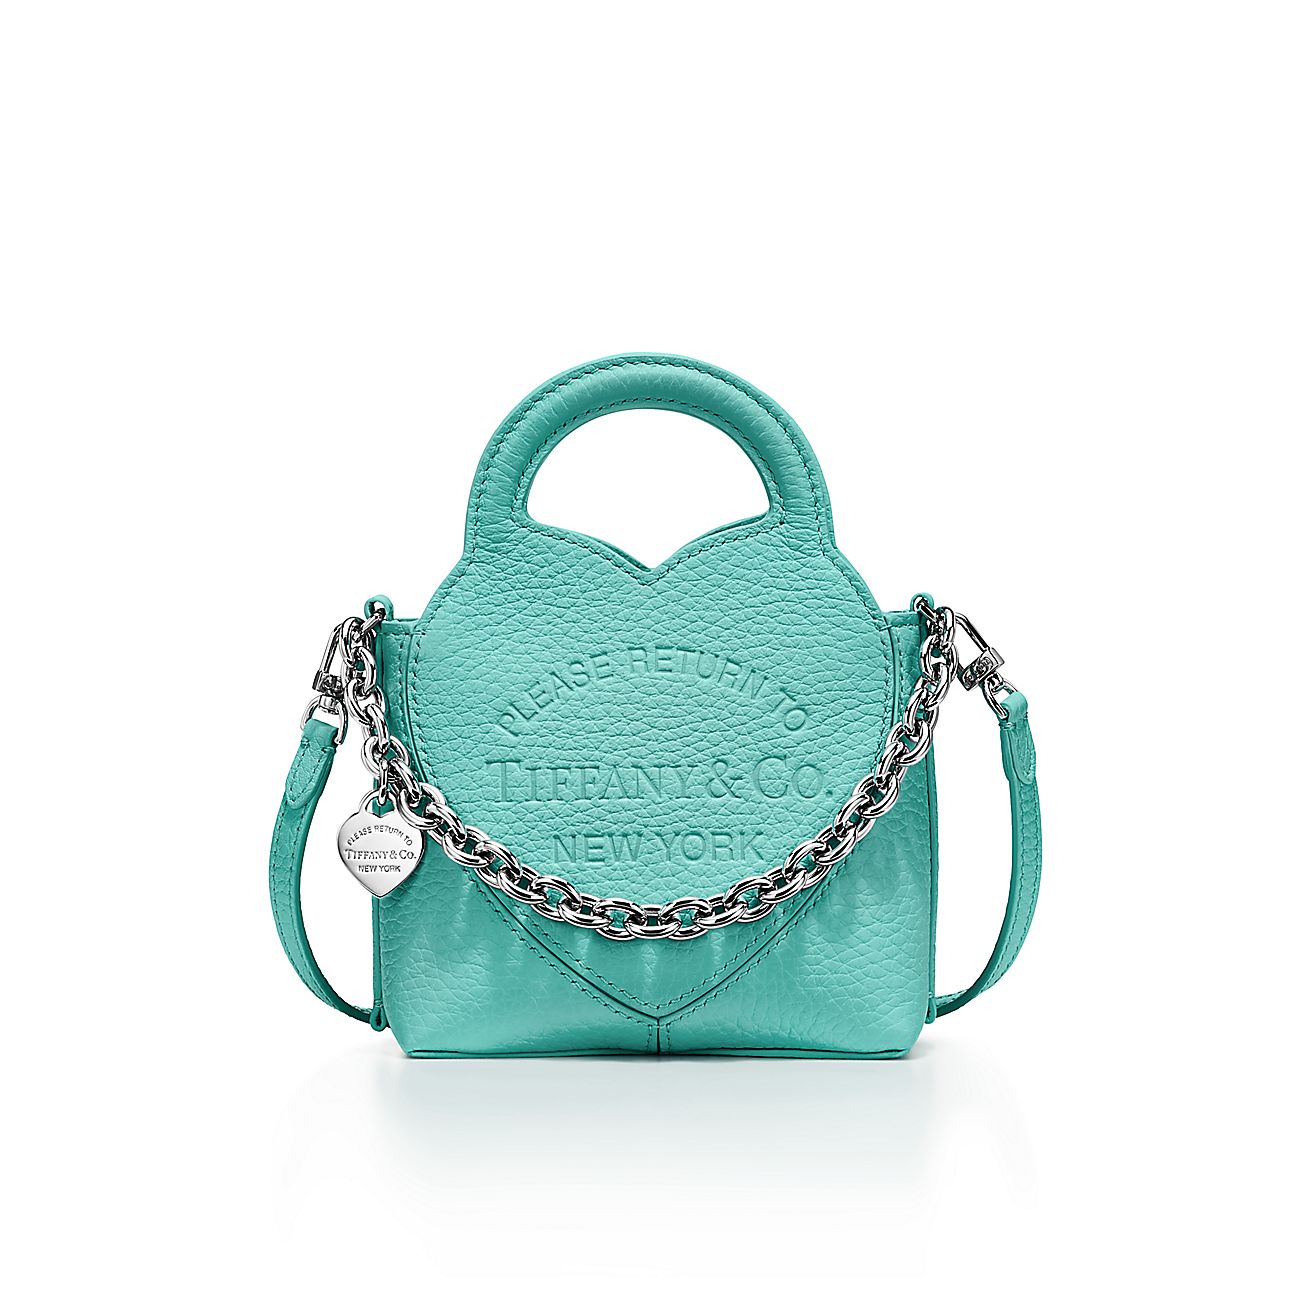 Tiffany & Co Blue Shopping Gift Bag 10 X 8 x 4